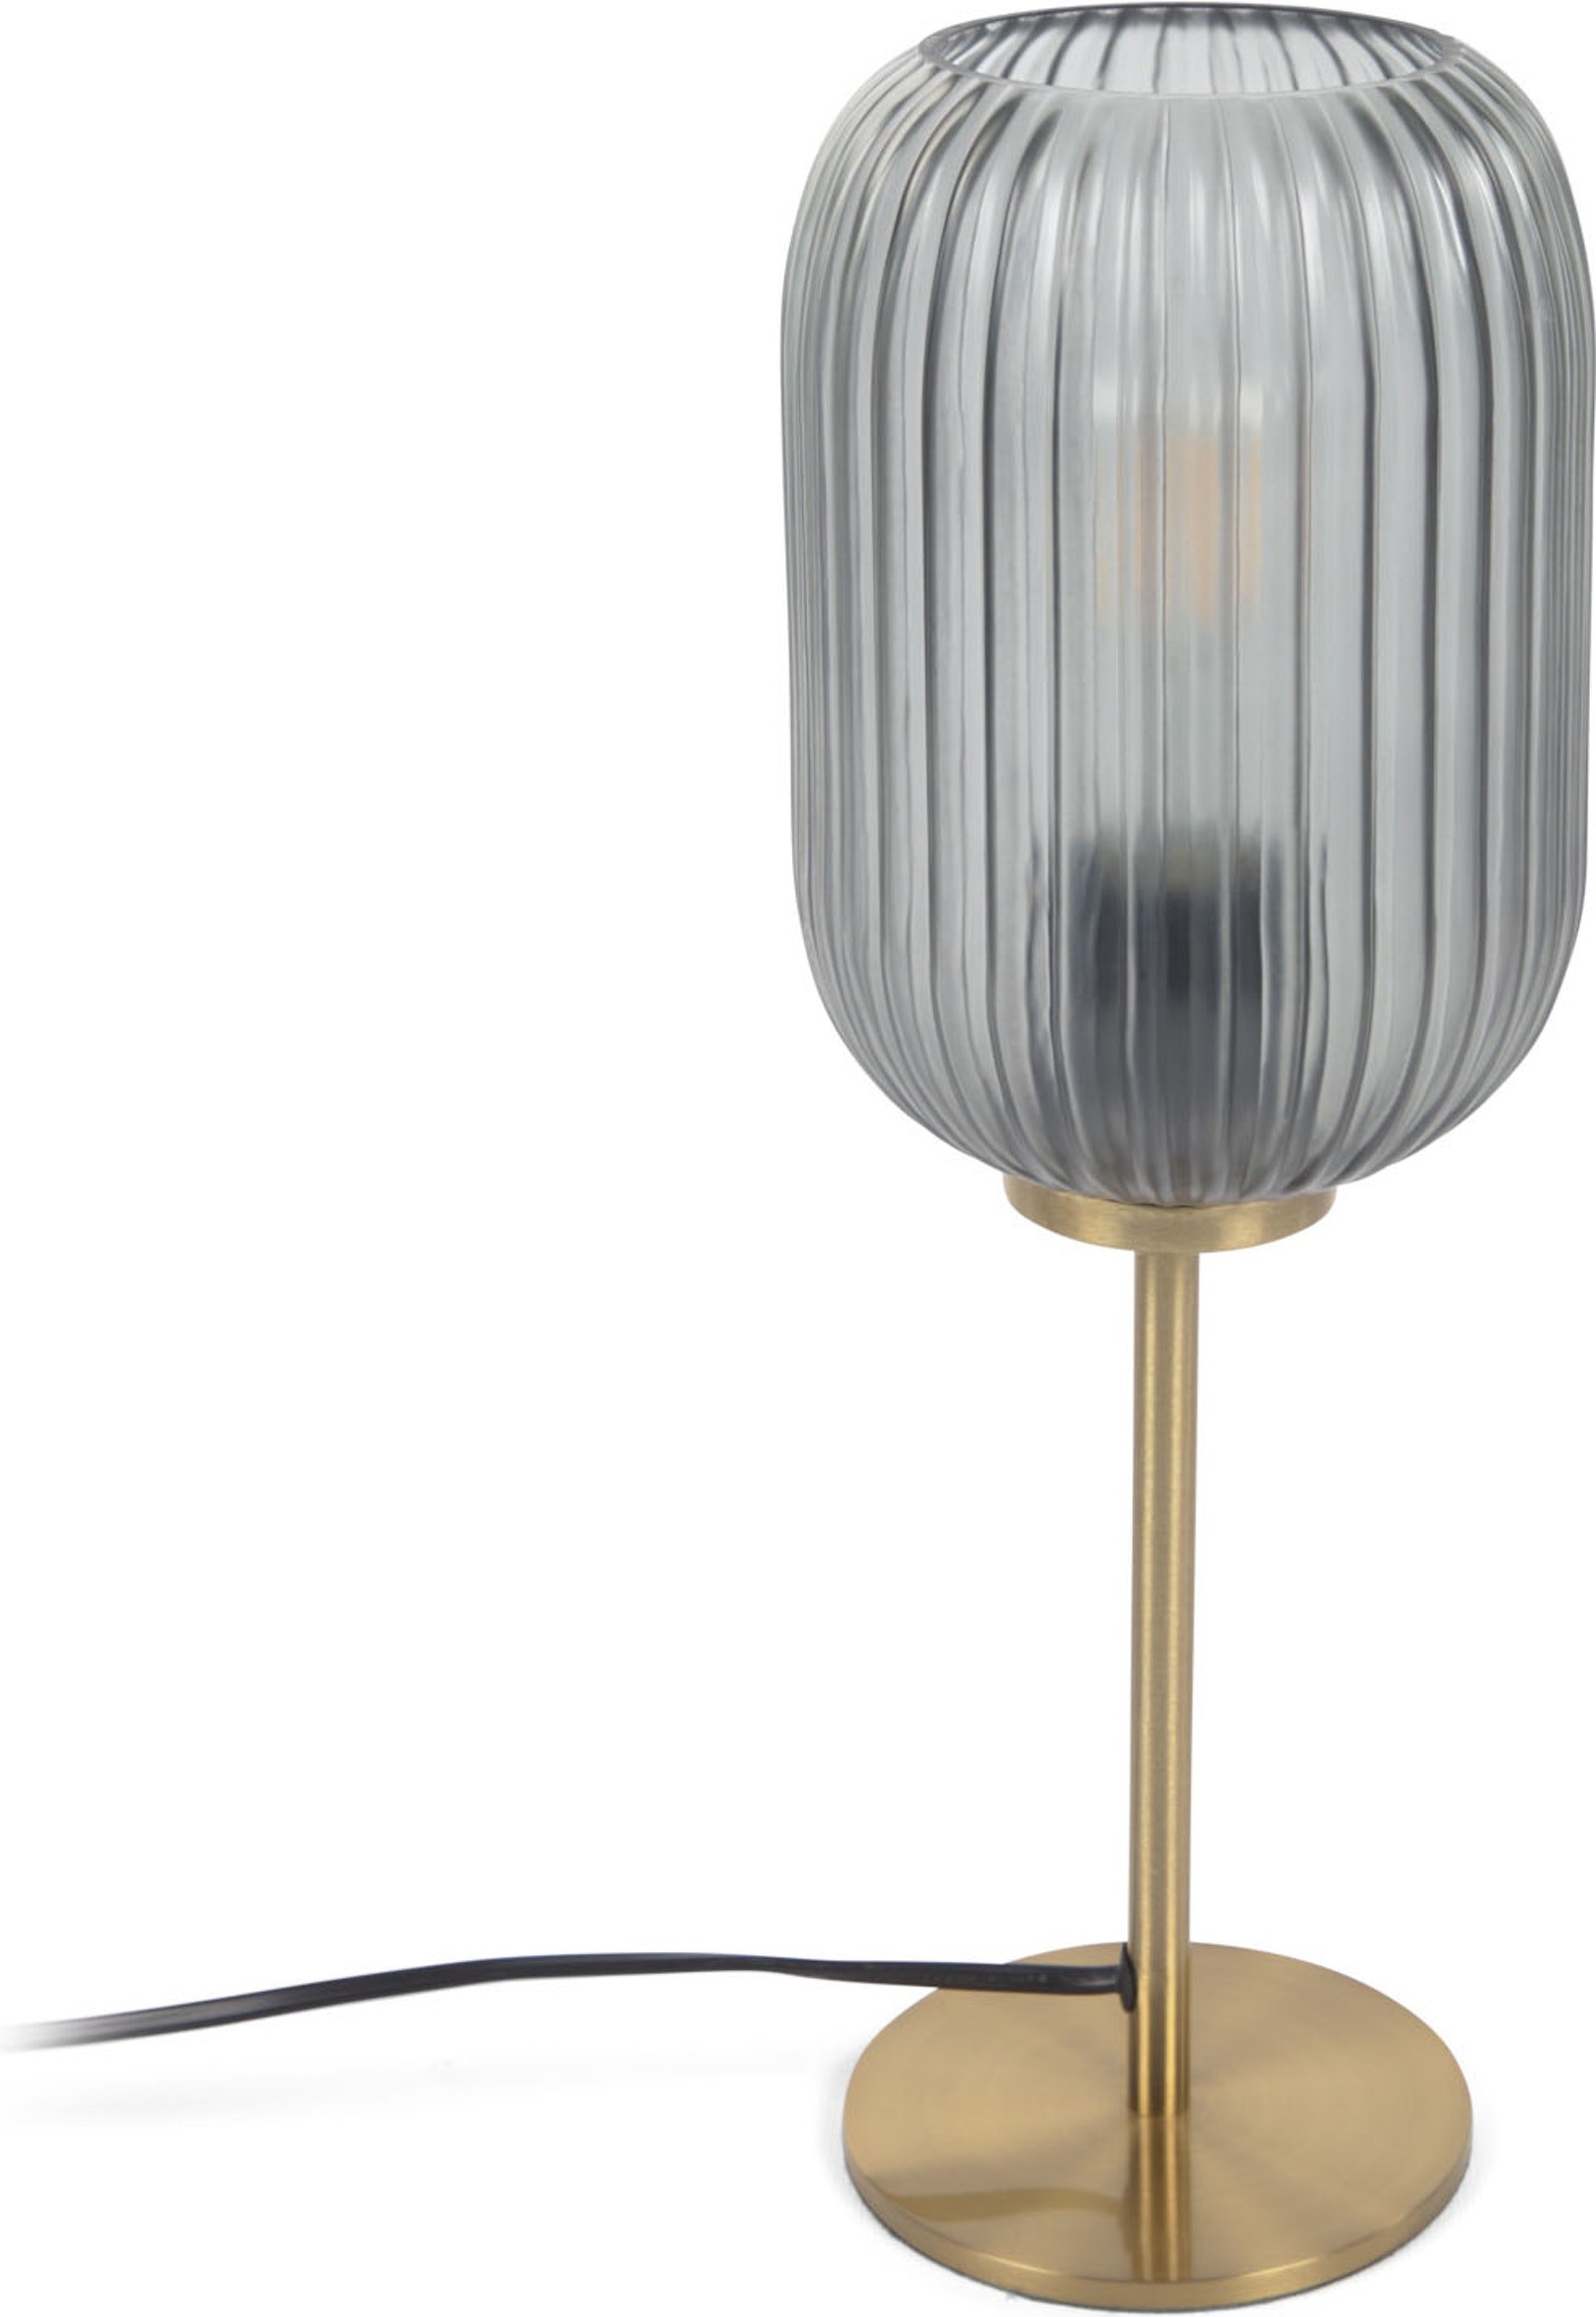 LAFORMA Hestia bordlampe - grå glas og messing metal